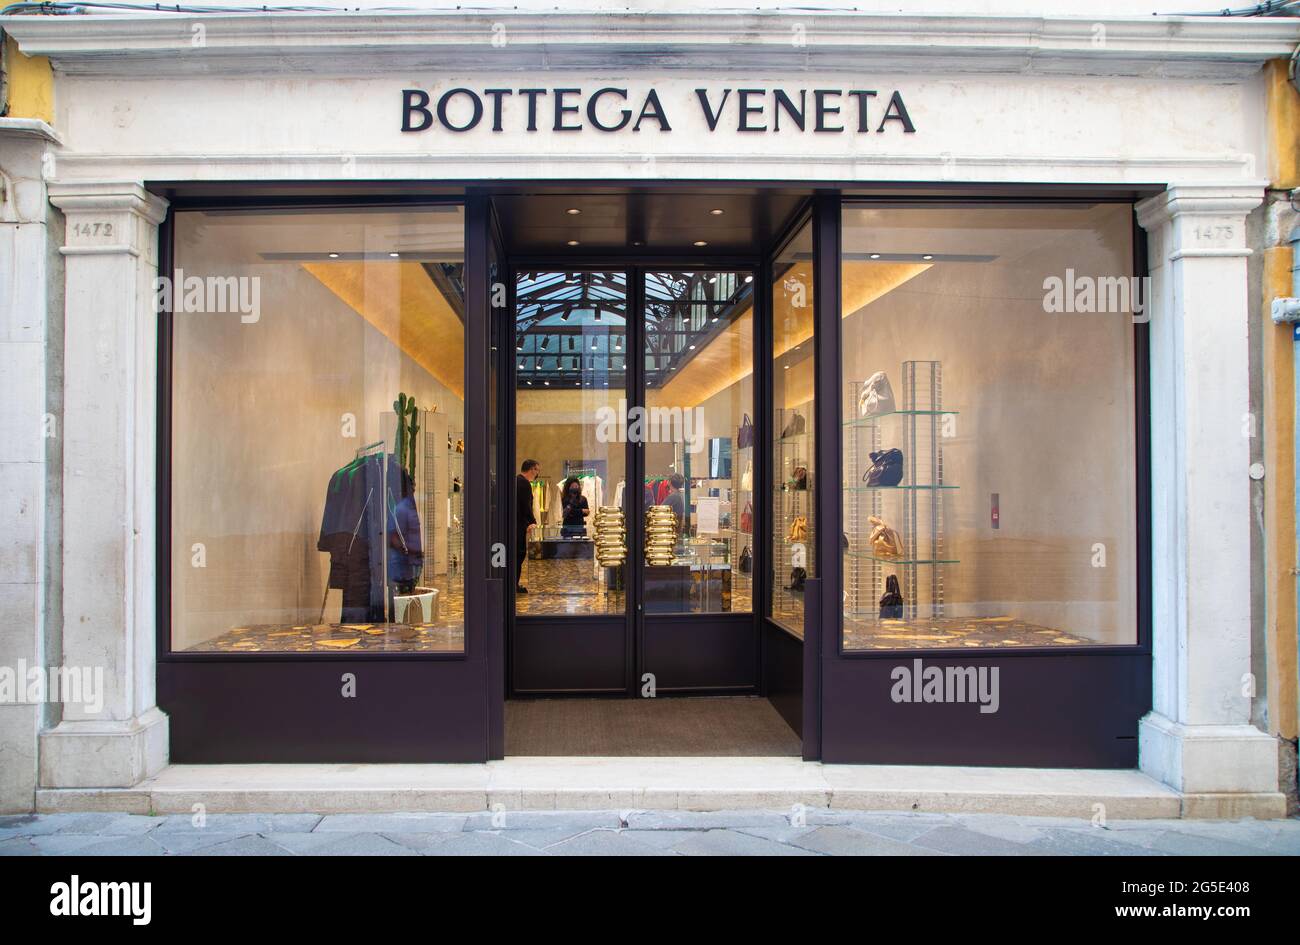 Bottega Veneta window in Venice, Italy Stock Photo